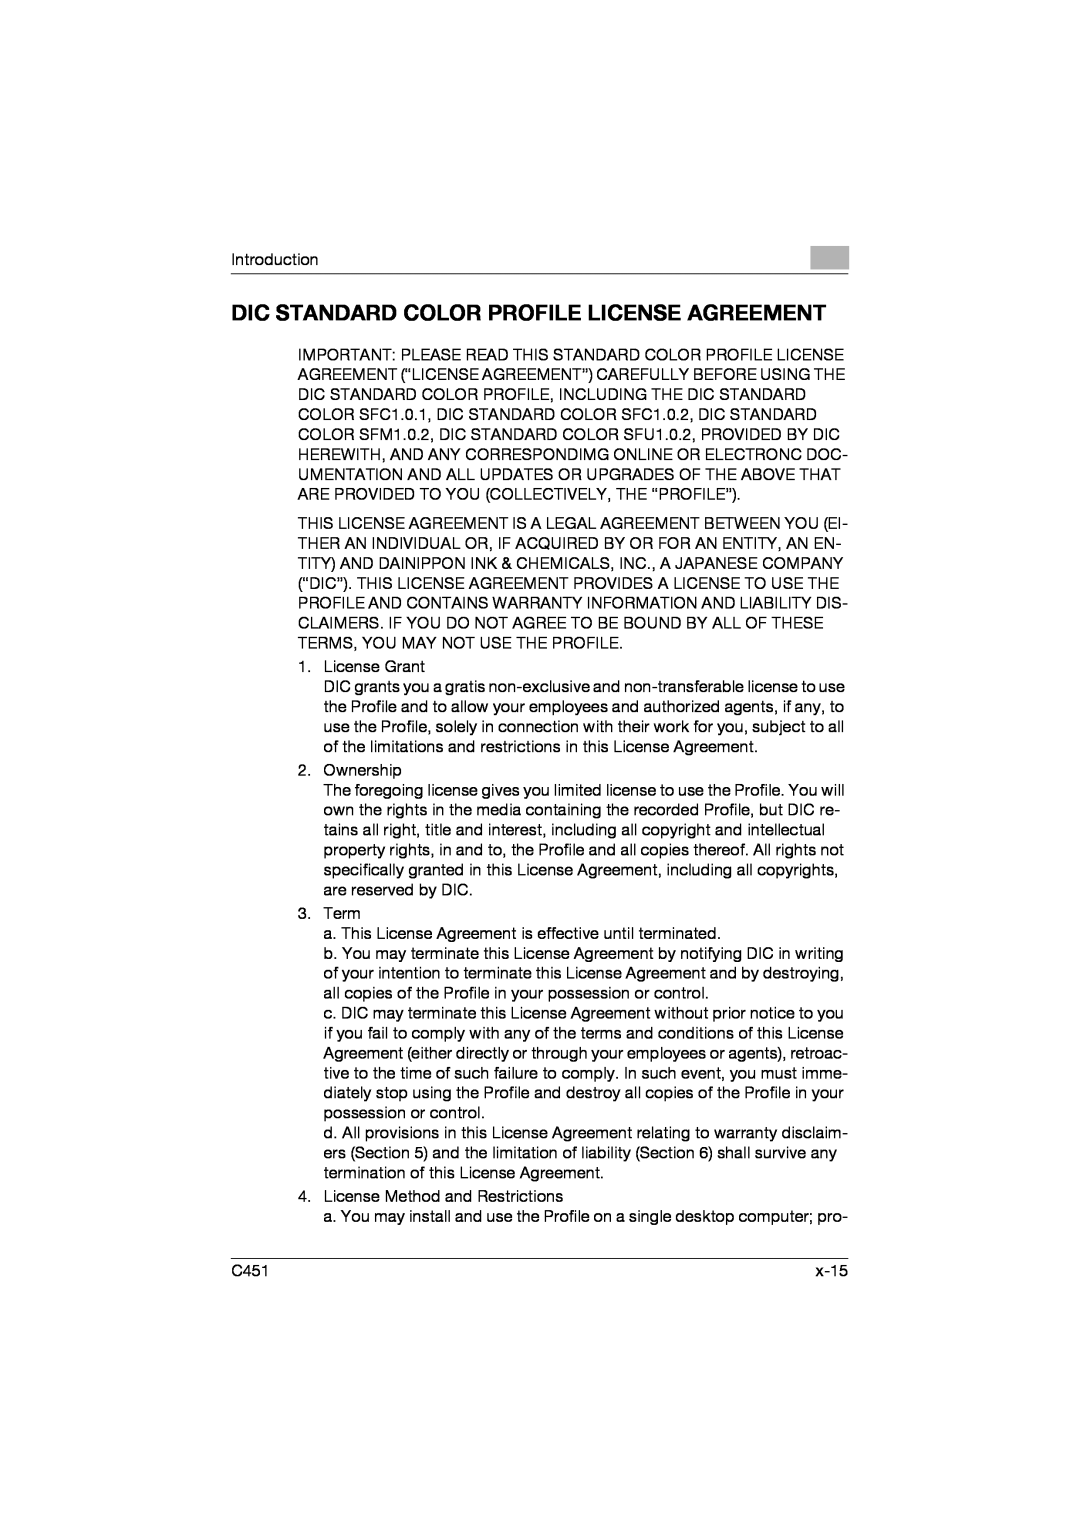 Konica Minolta C451 manual Dic Standard Color Profile License Agreement 